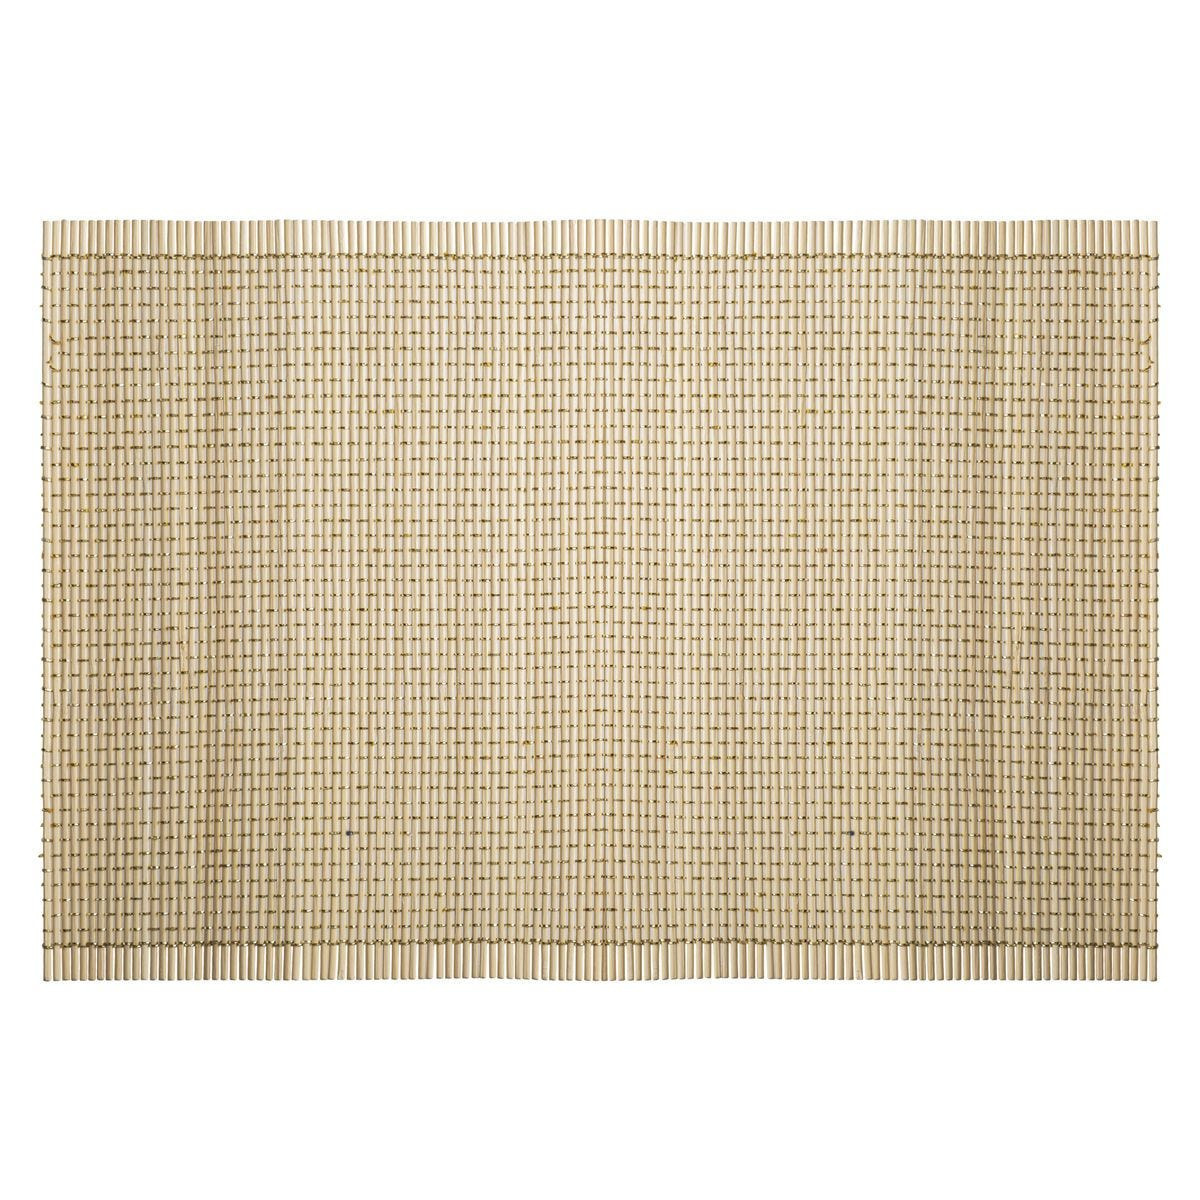 Rechthoekige placemat beige bamboe 45 x 30 cm